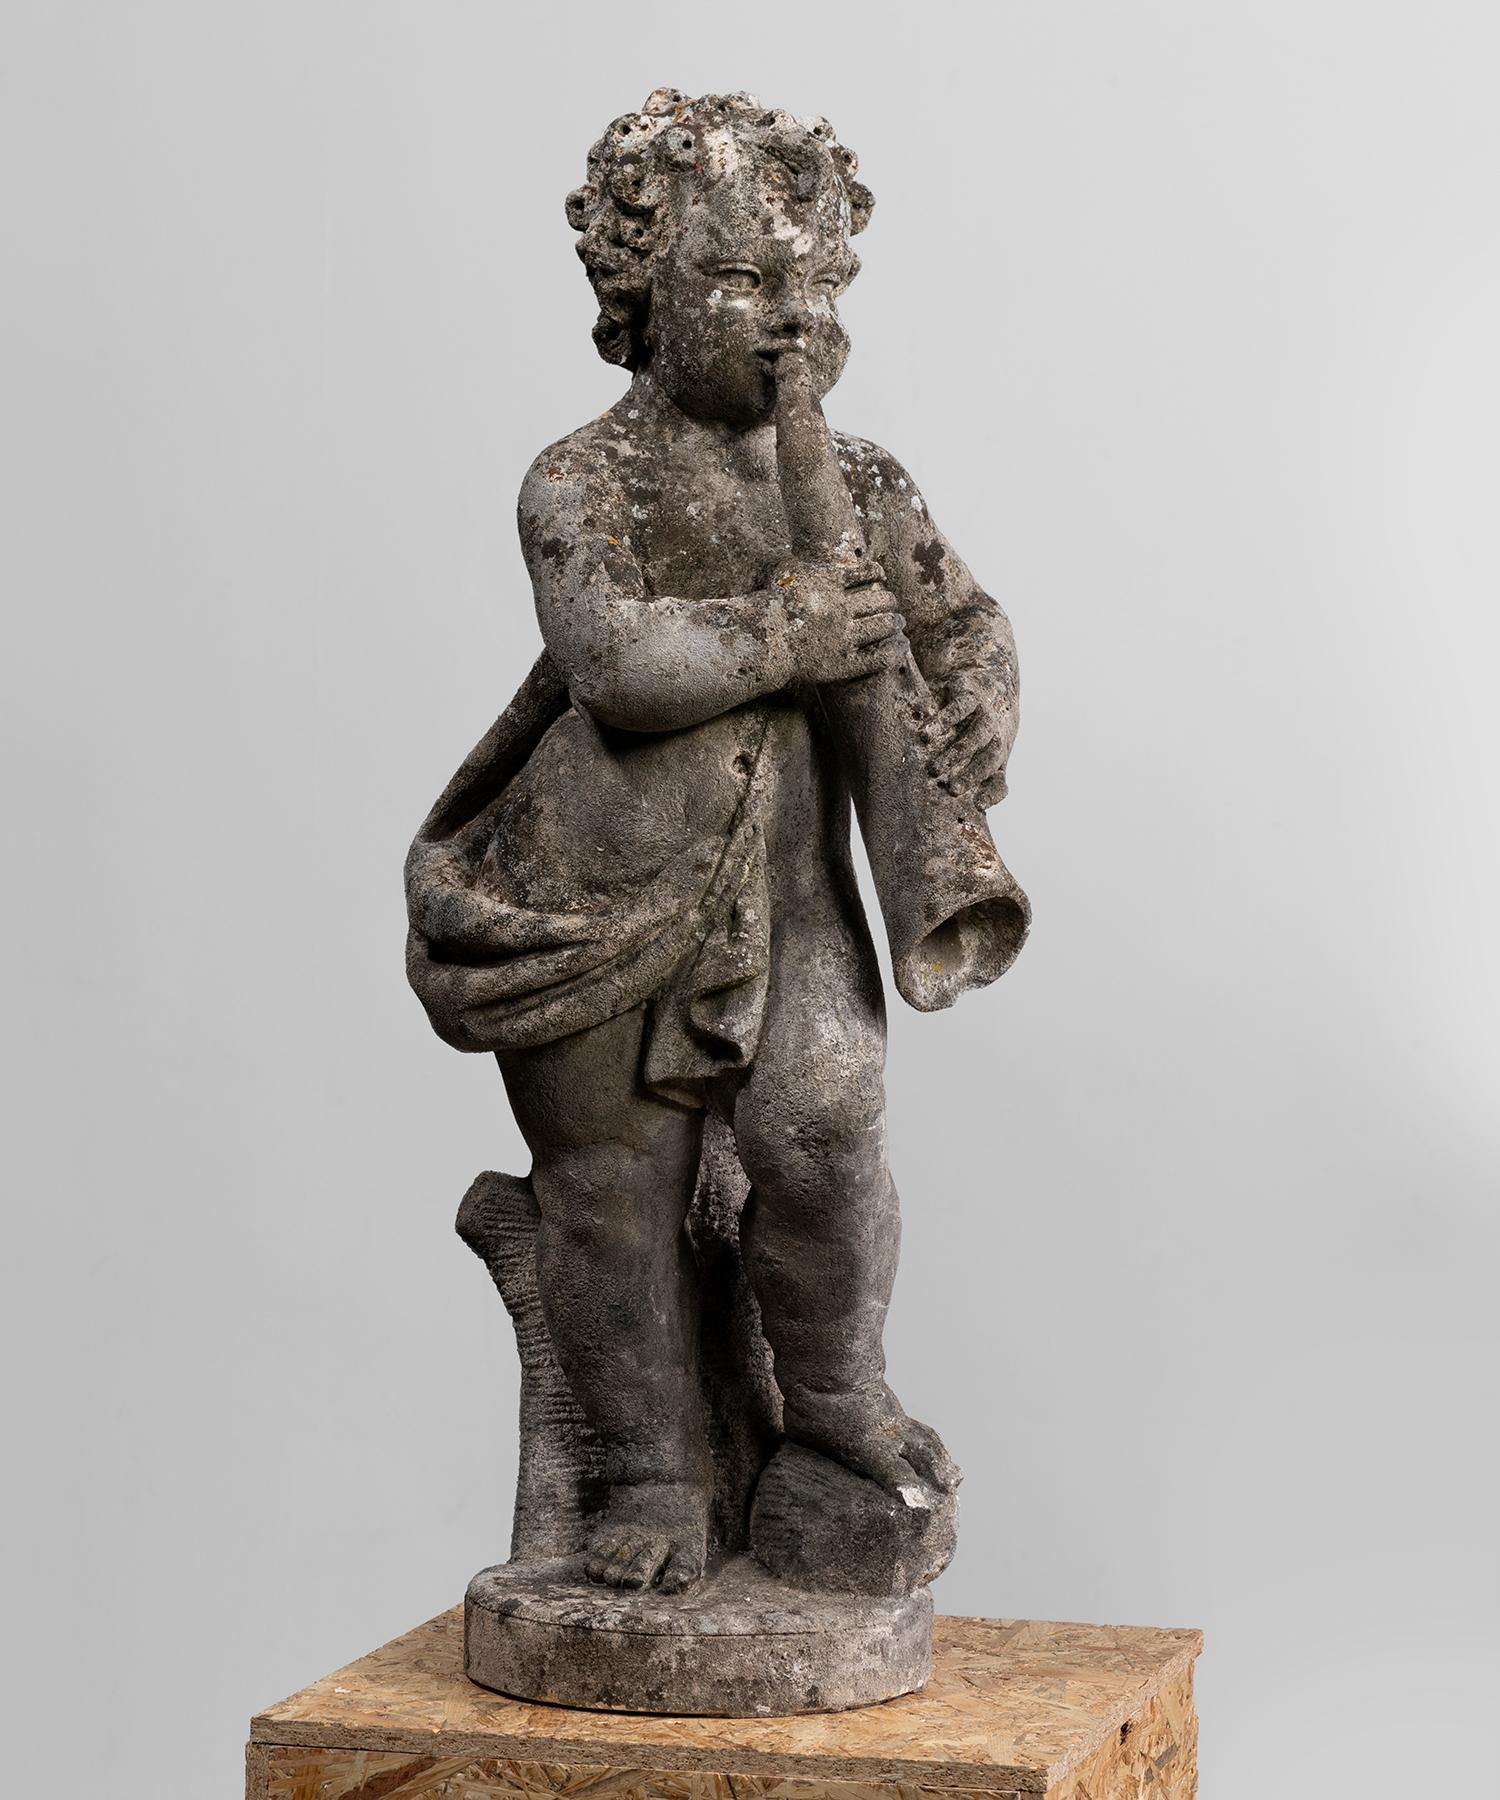 Cast stone garden statue of cherub with horn. wonderful patina